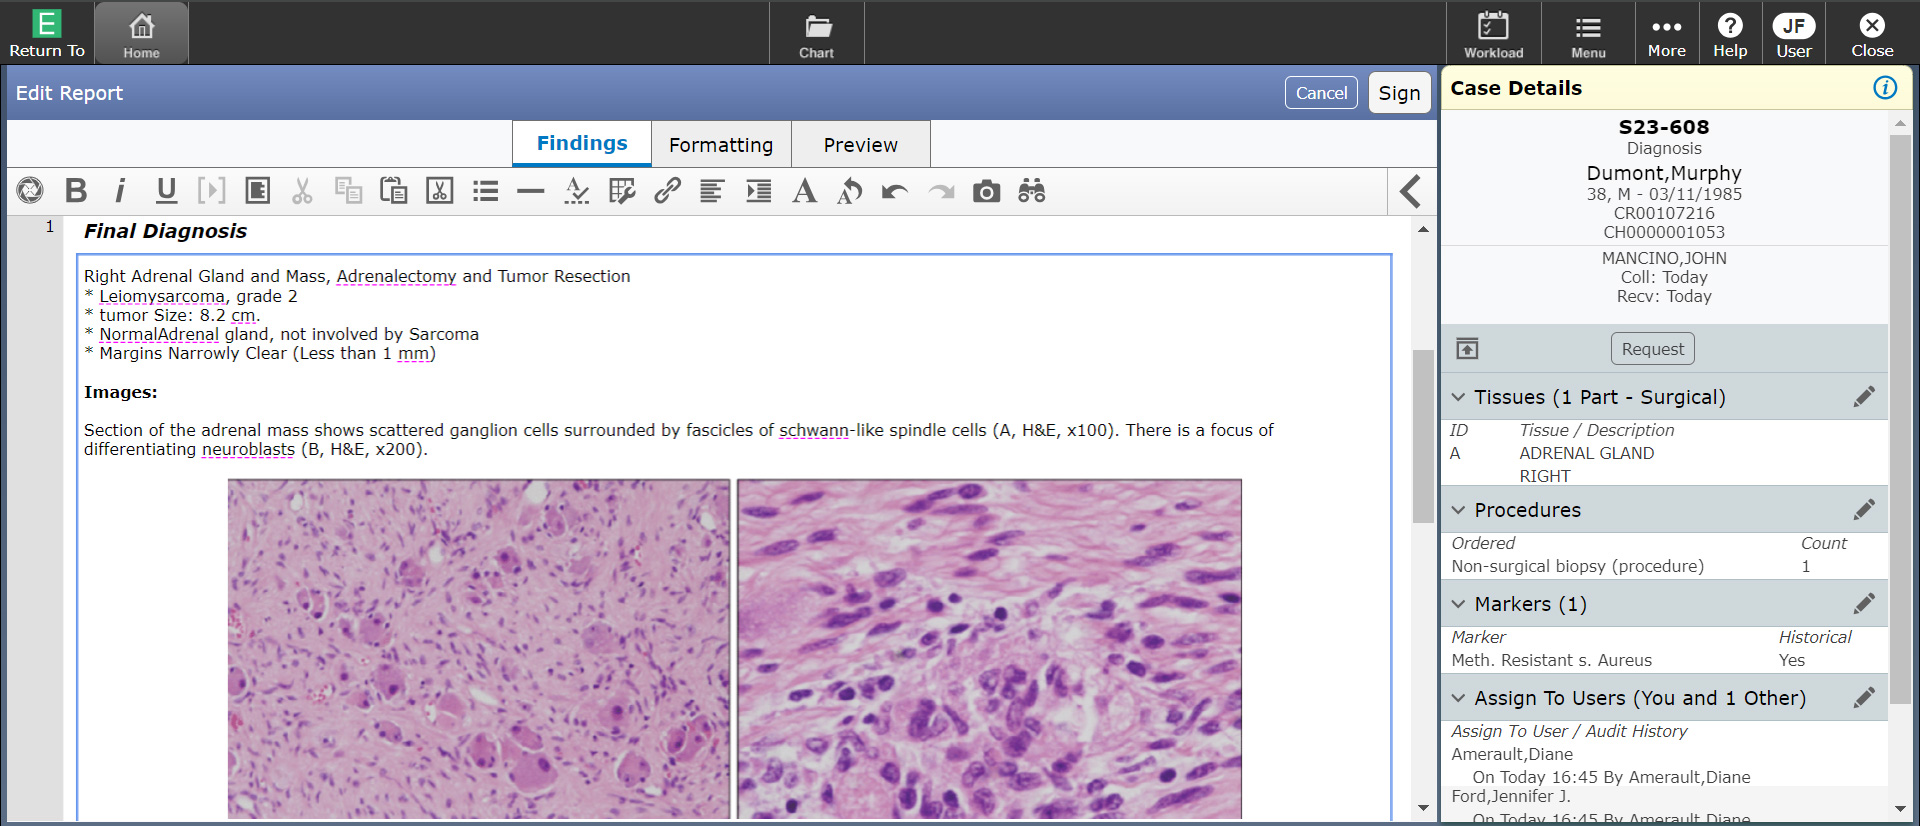 MEDITECH Expanse Pathology screenshot